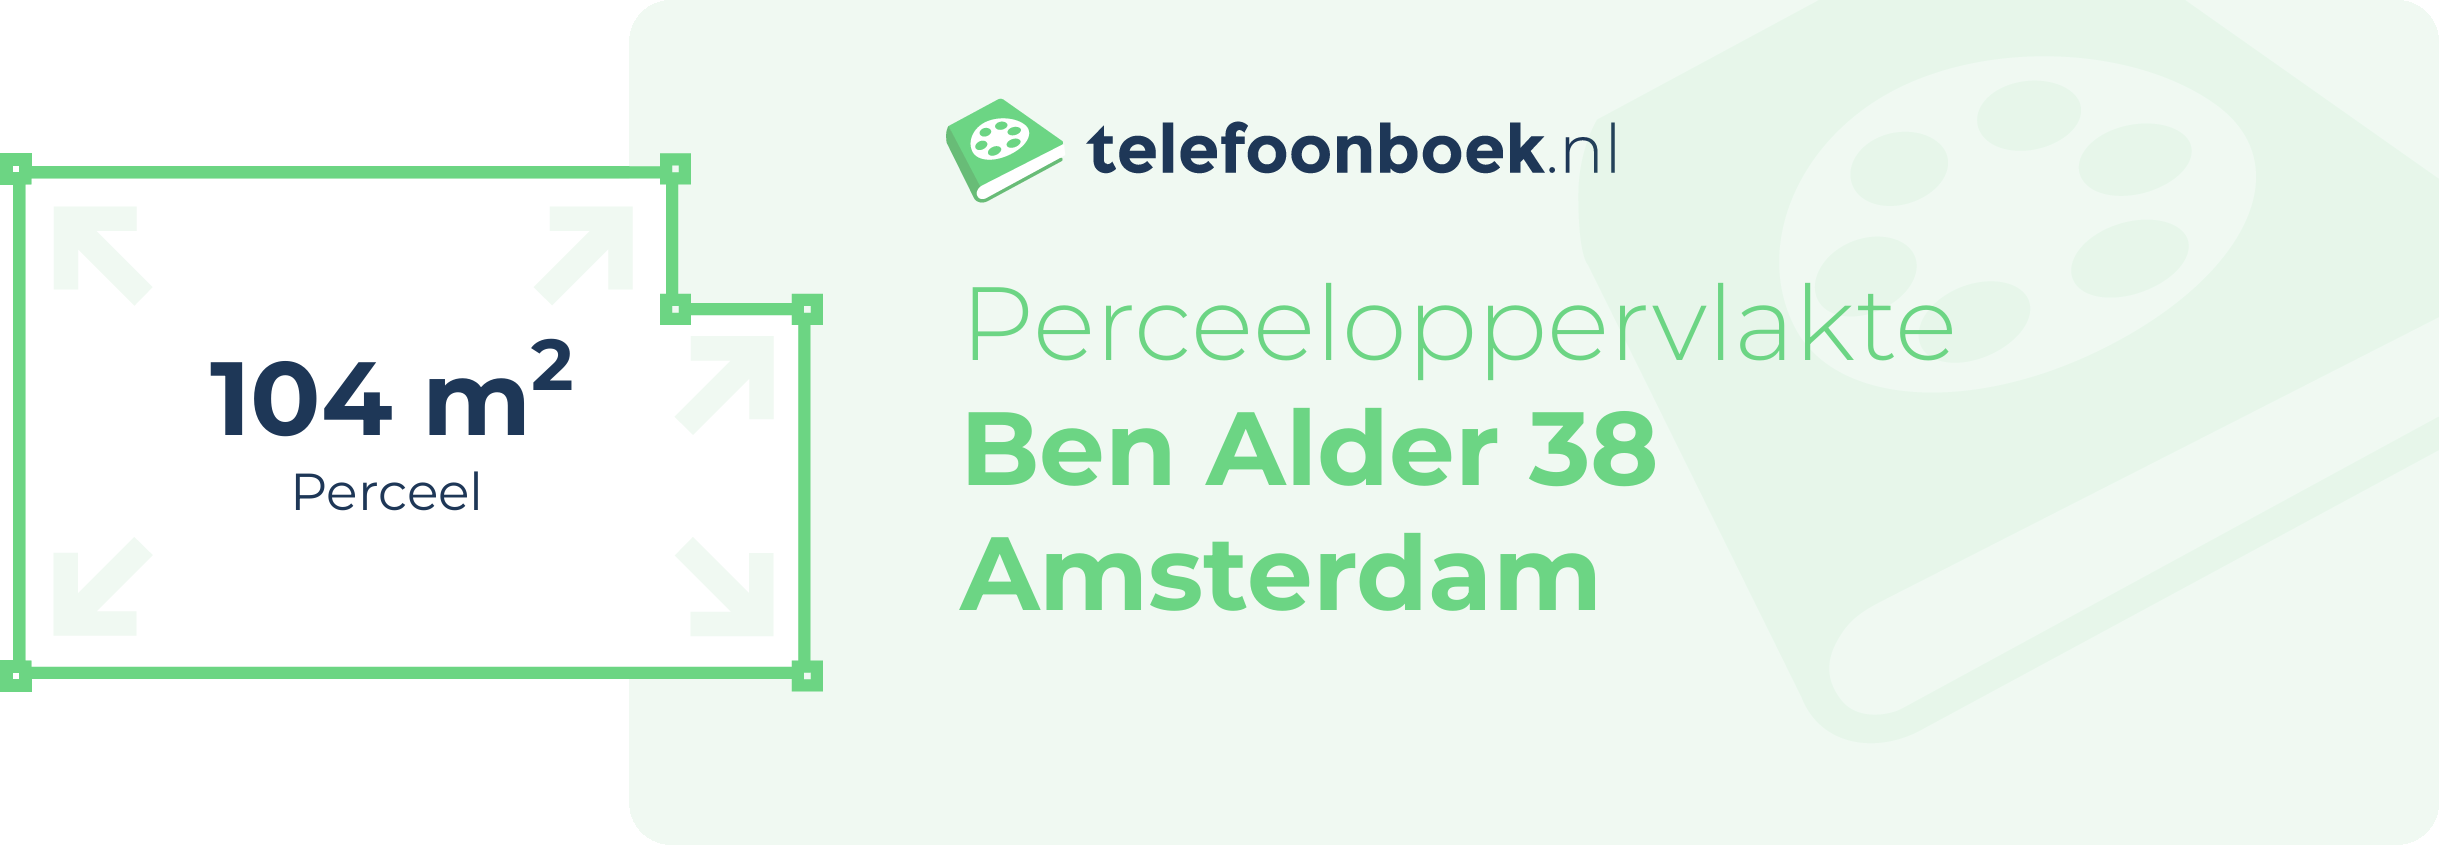 Perceeloppervlakte Ben Alder 38 Amsterdam